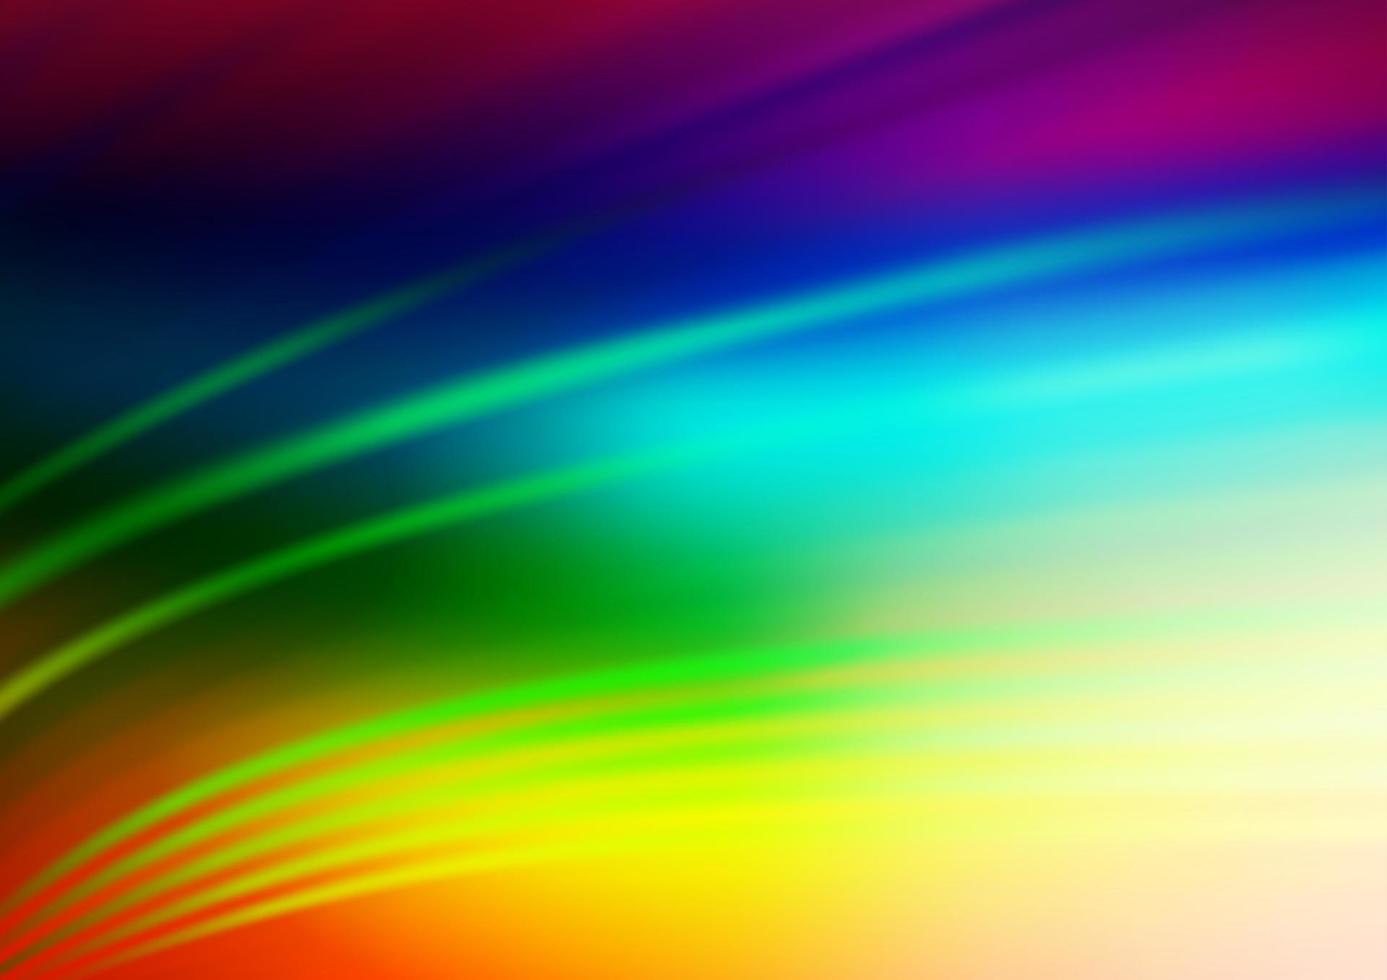 Light Multicolor, Rainbow vector blurred bright template.